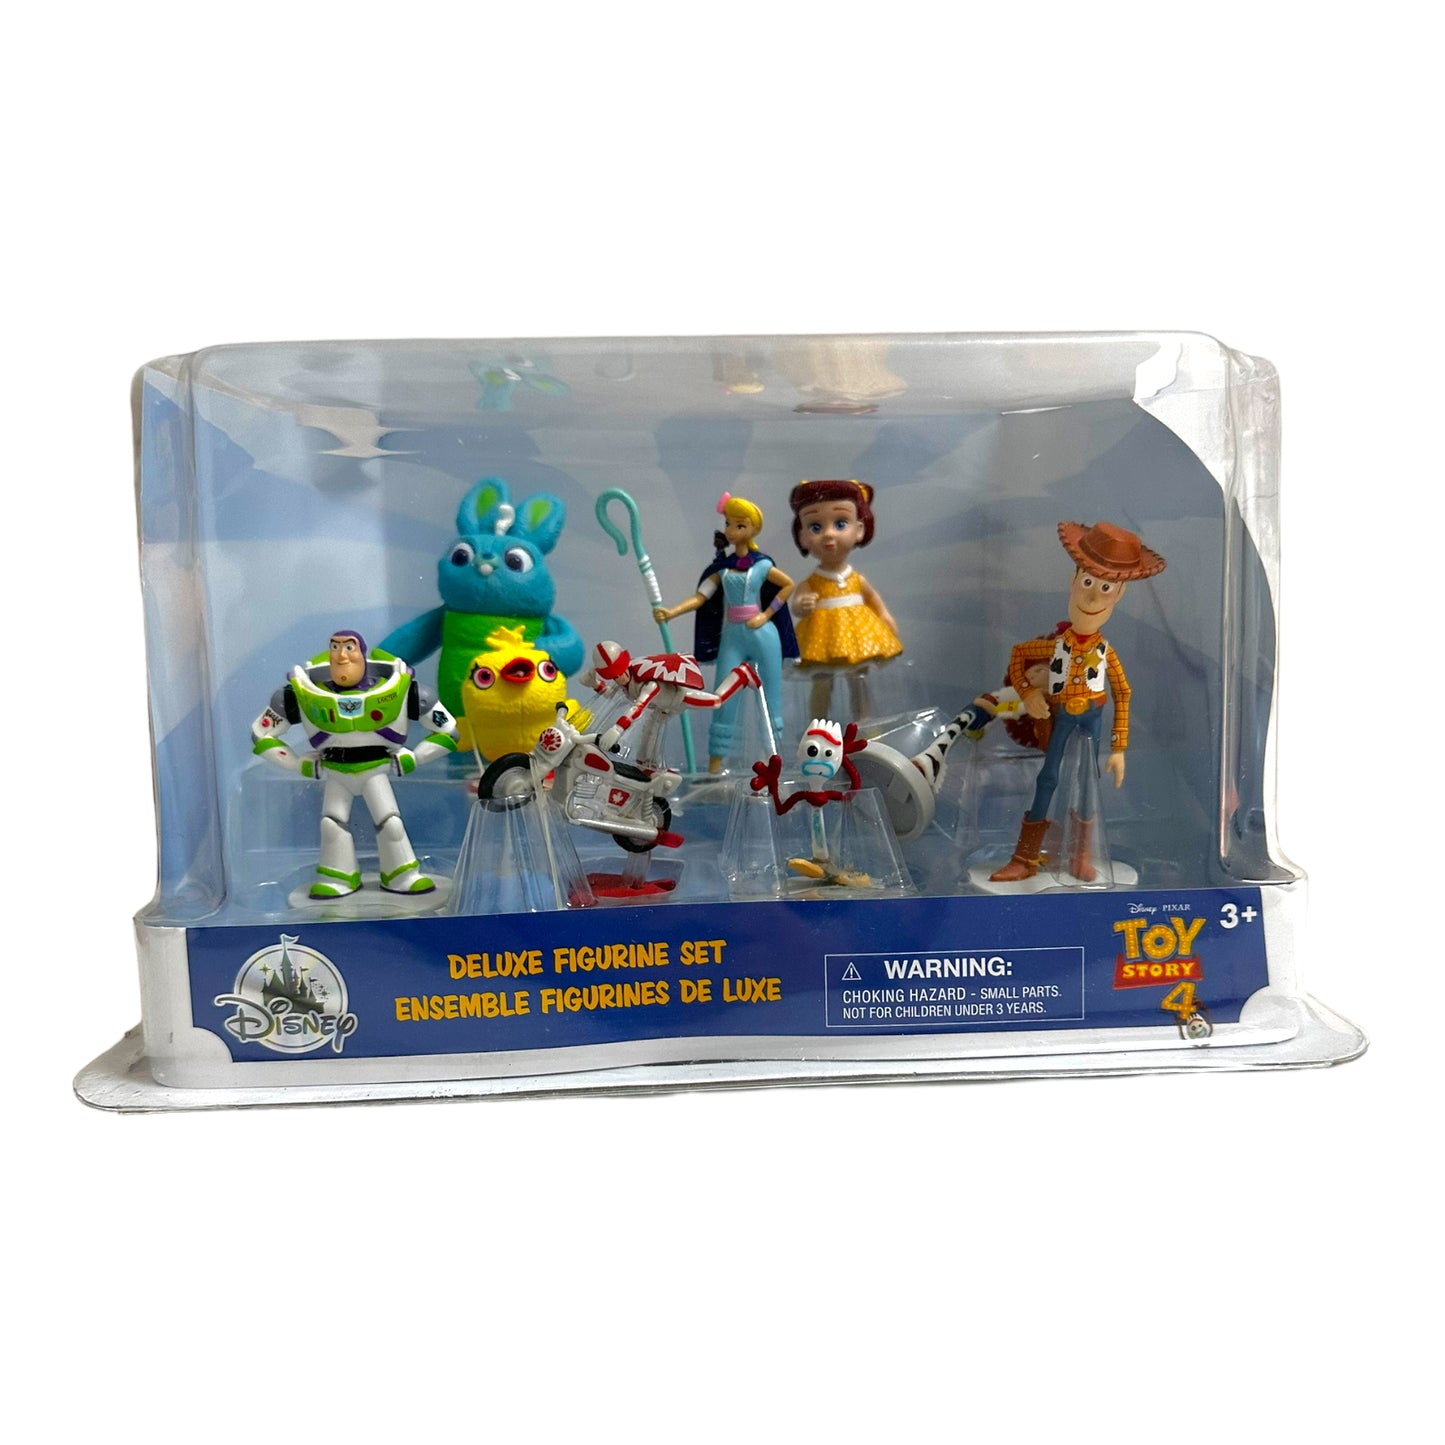  Disney Pixar Toy Story Deluxe Figurine Play Set : Toys